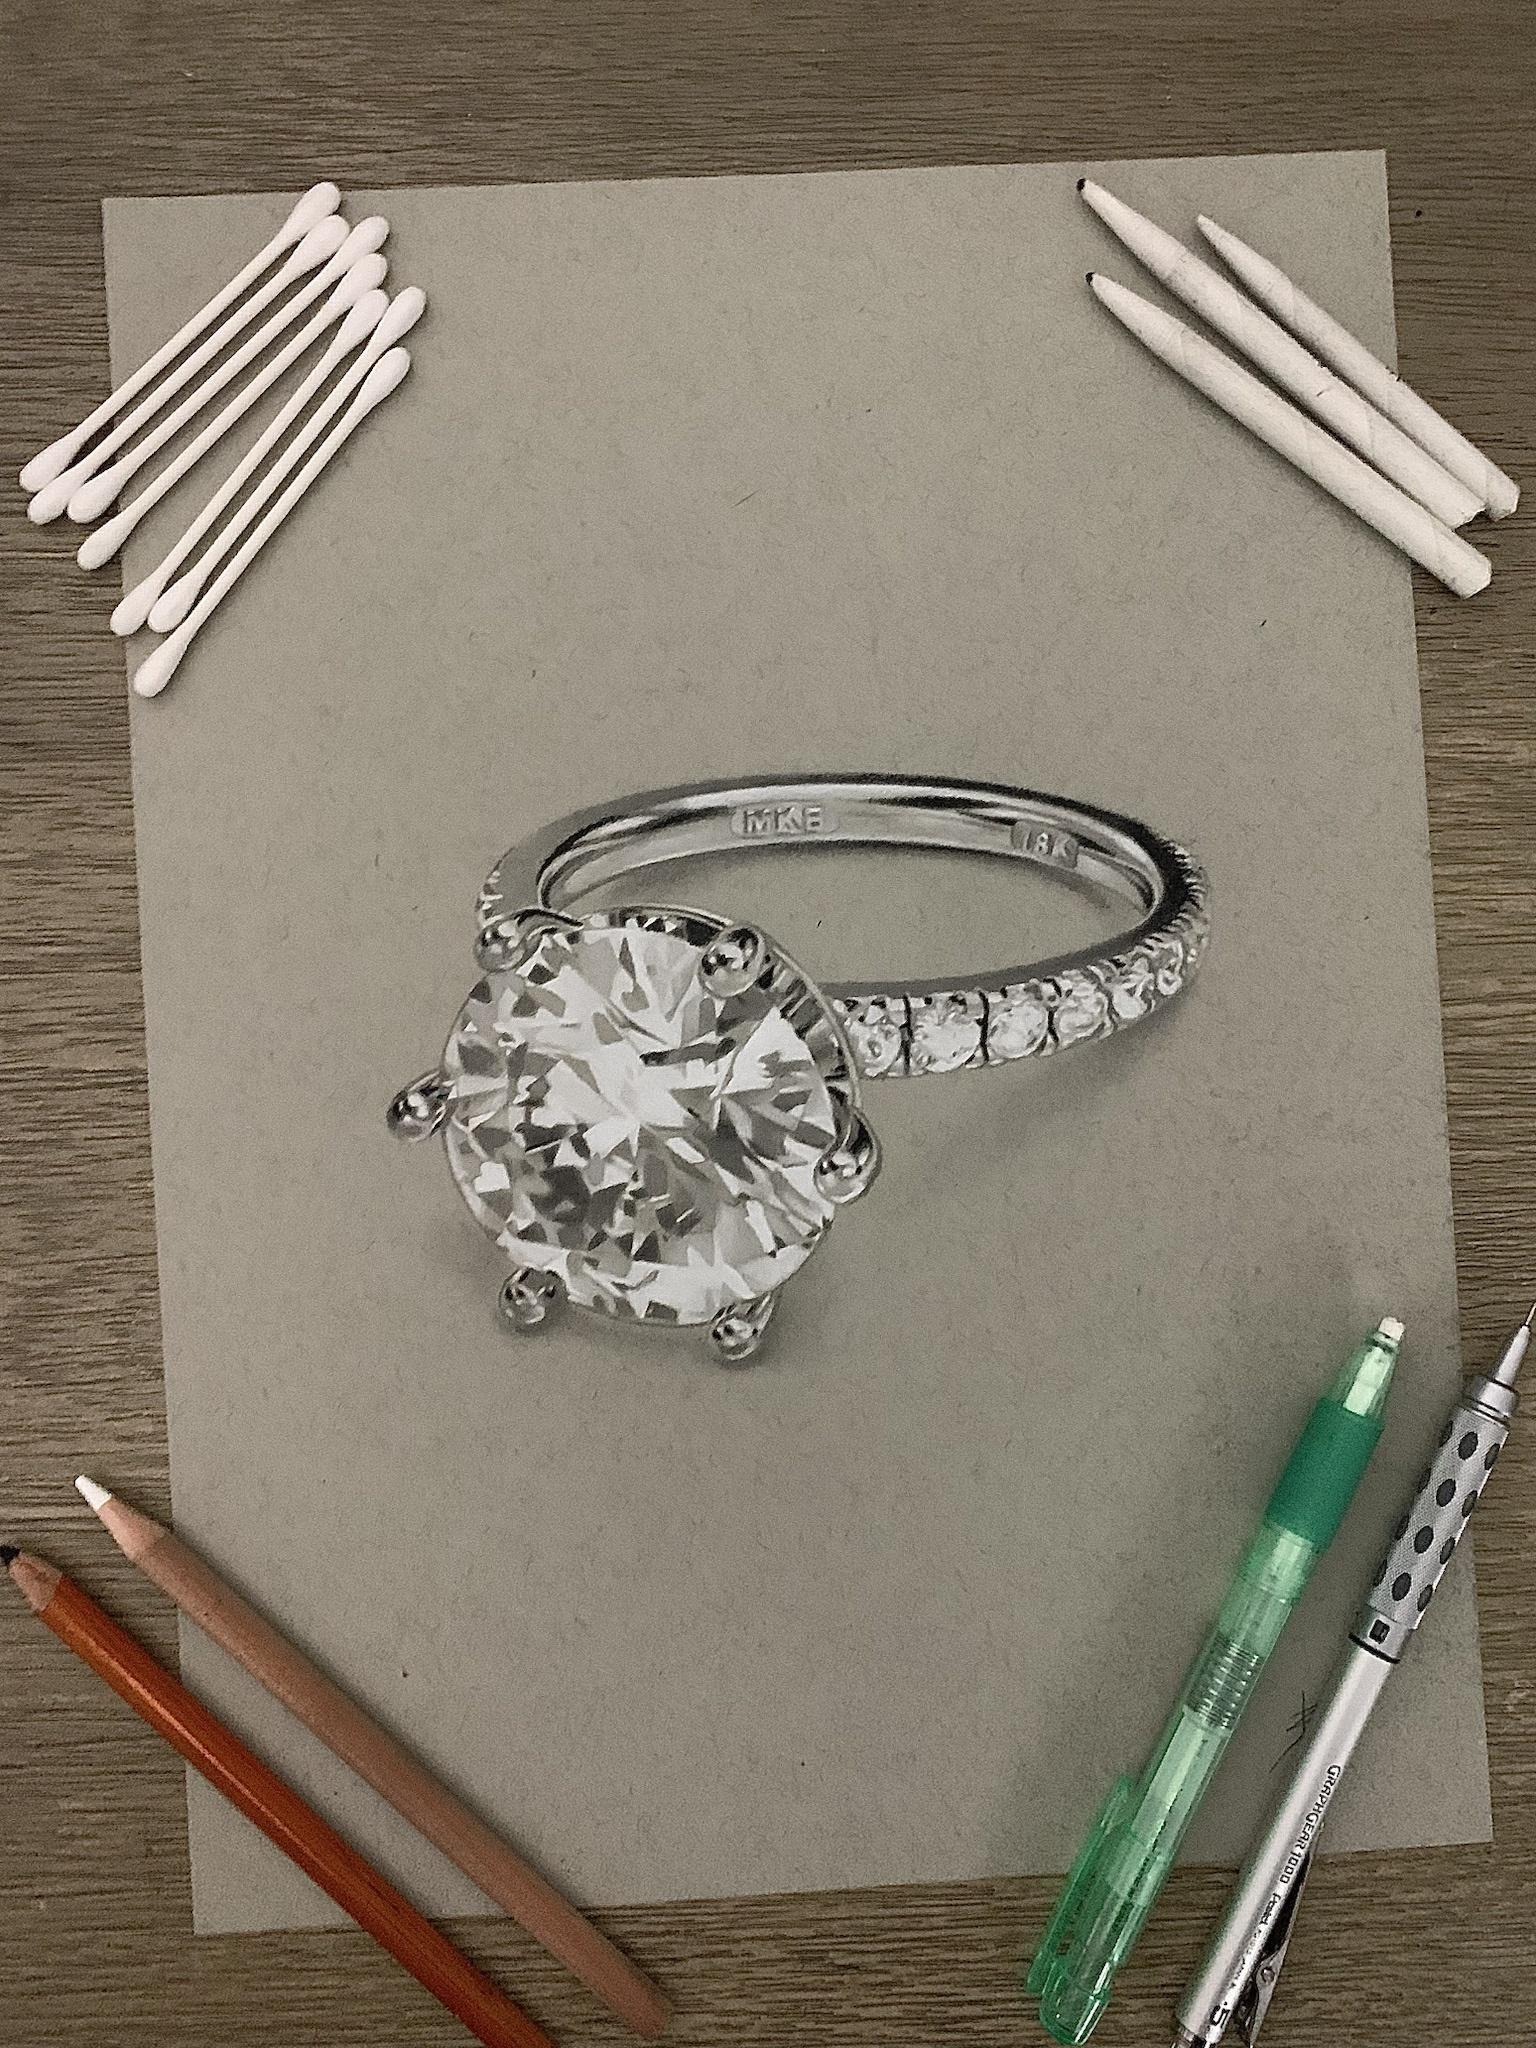 My original drawing of a diamond ring